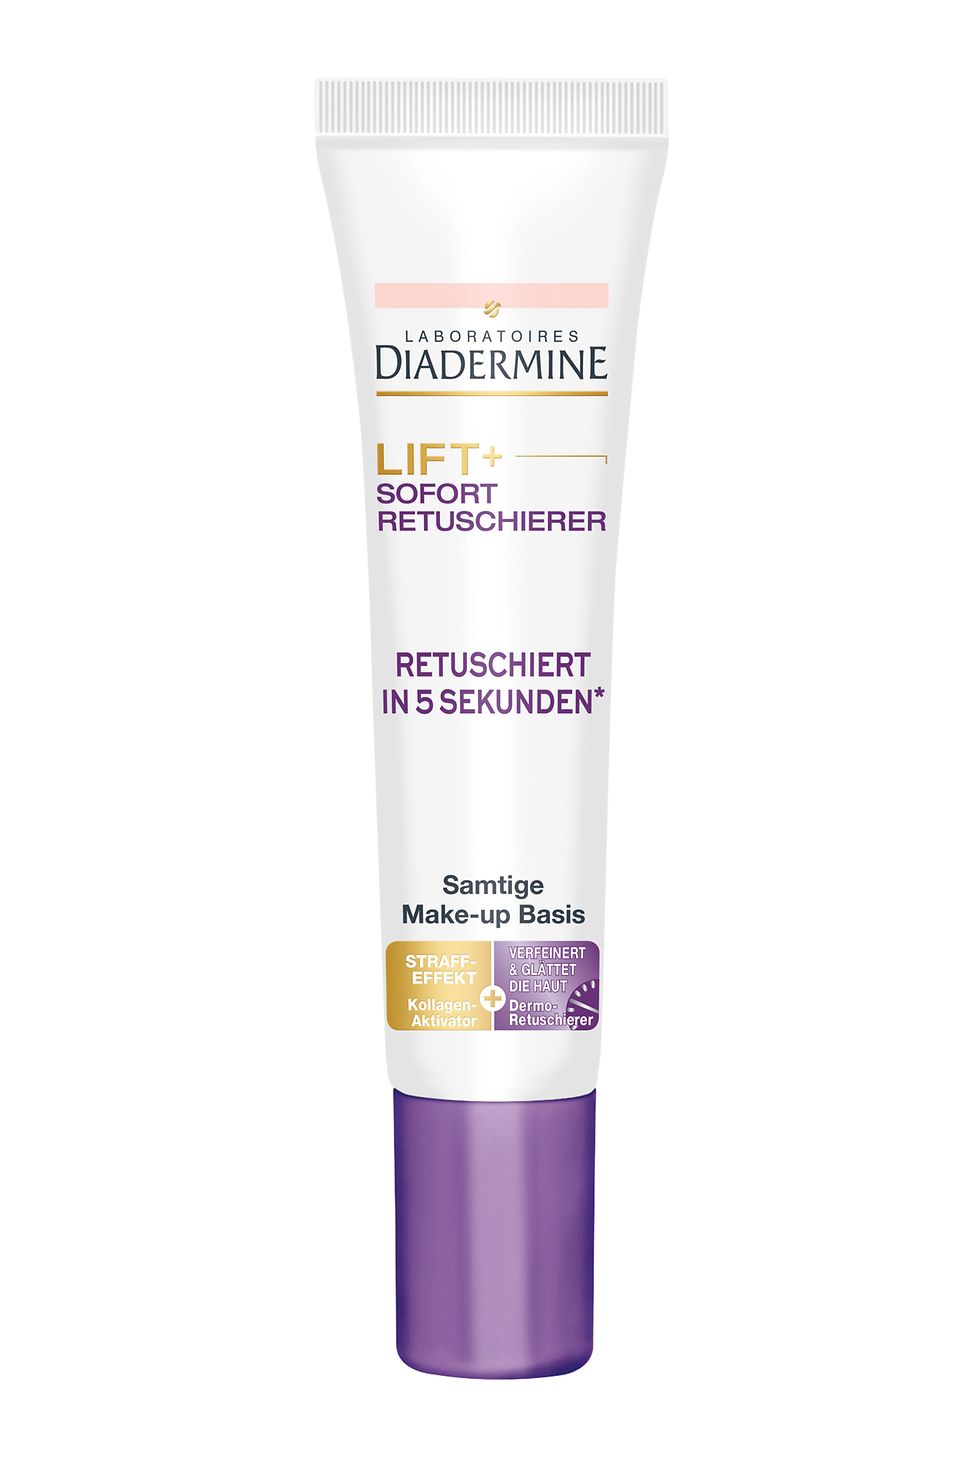 Diadermine Lift+ Sofort Retuschierer Samtige Make-up Basis